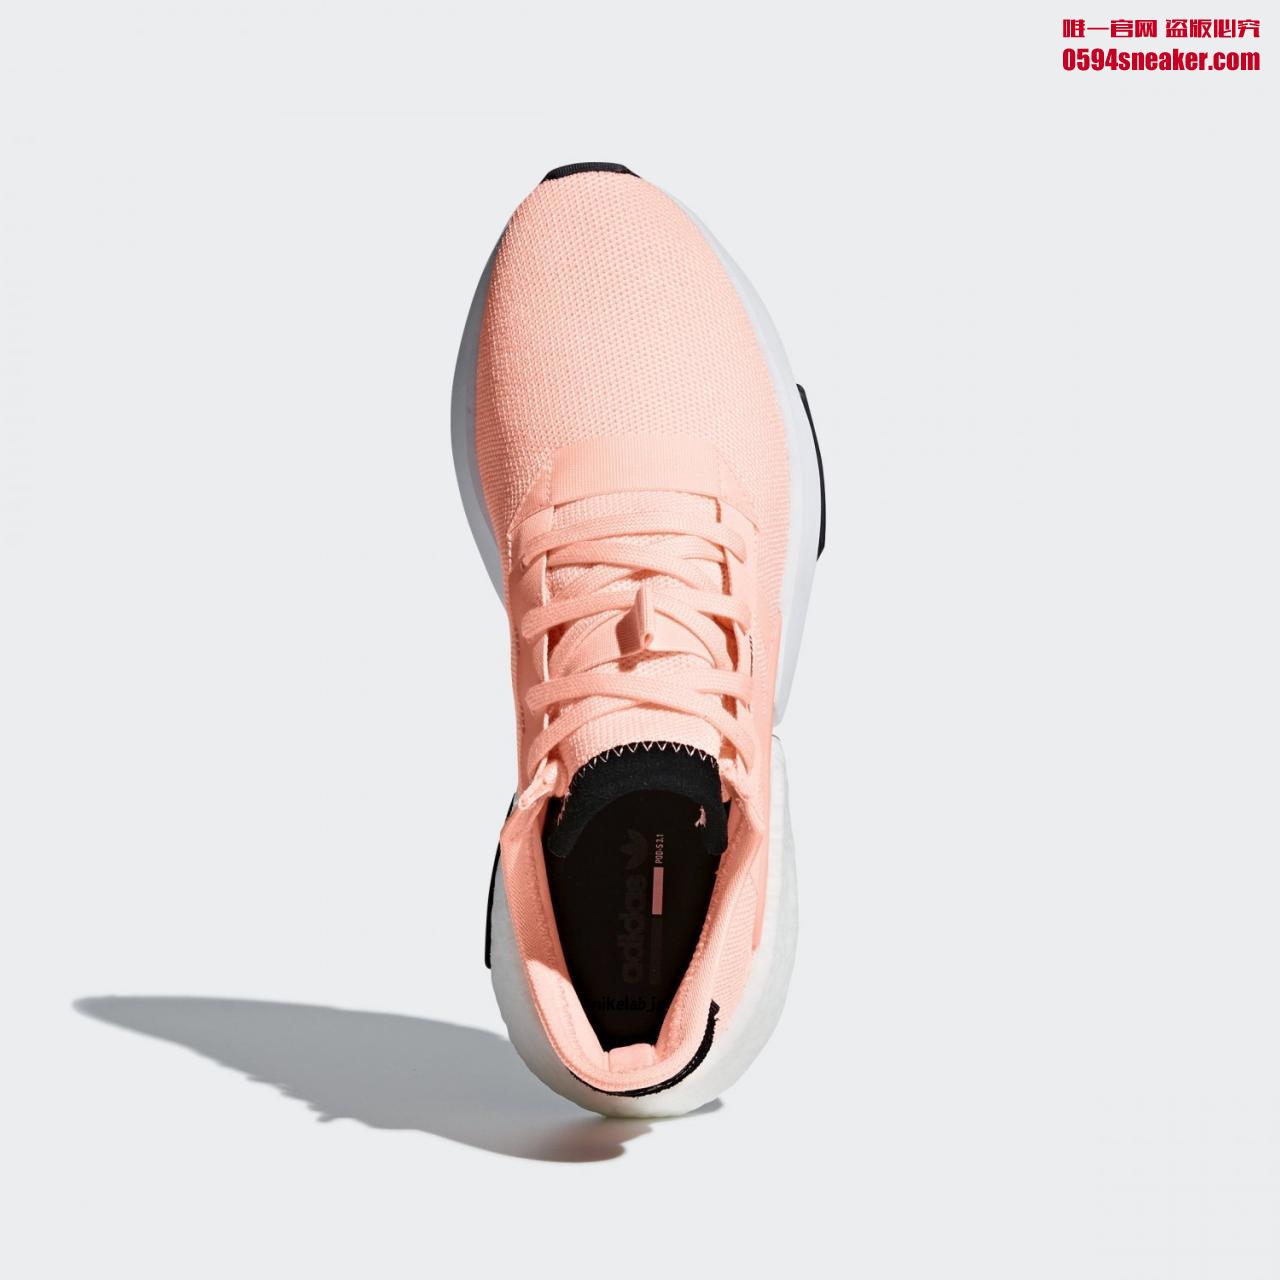 adidas POD S3.1 货号：“Pink” B37364、“Gray” B37365